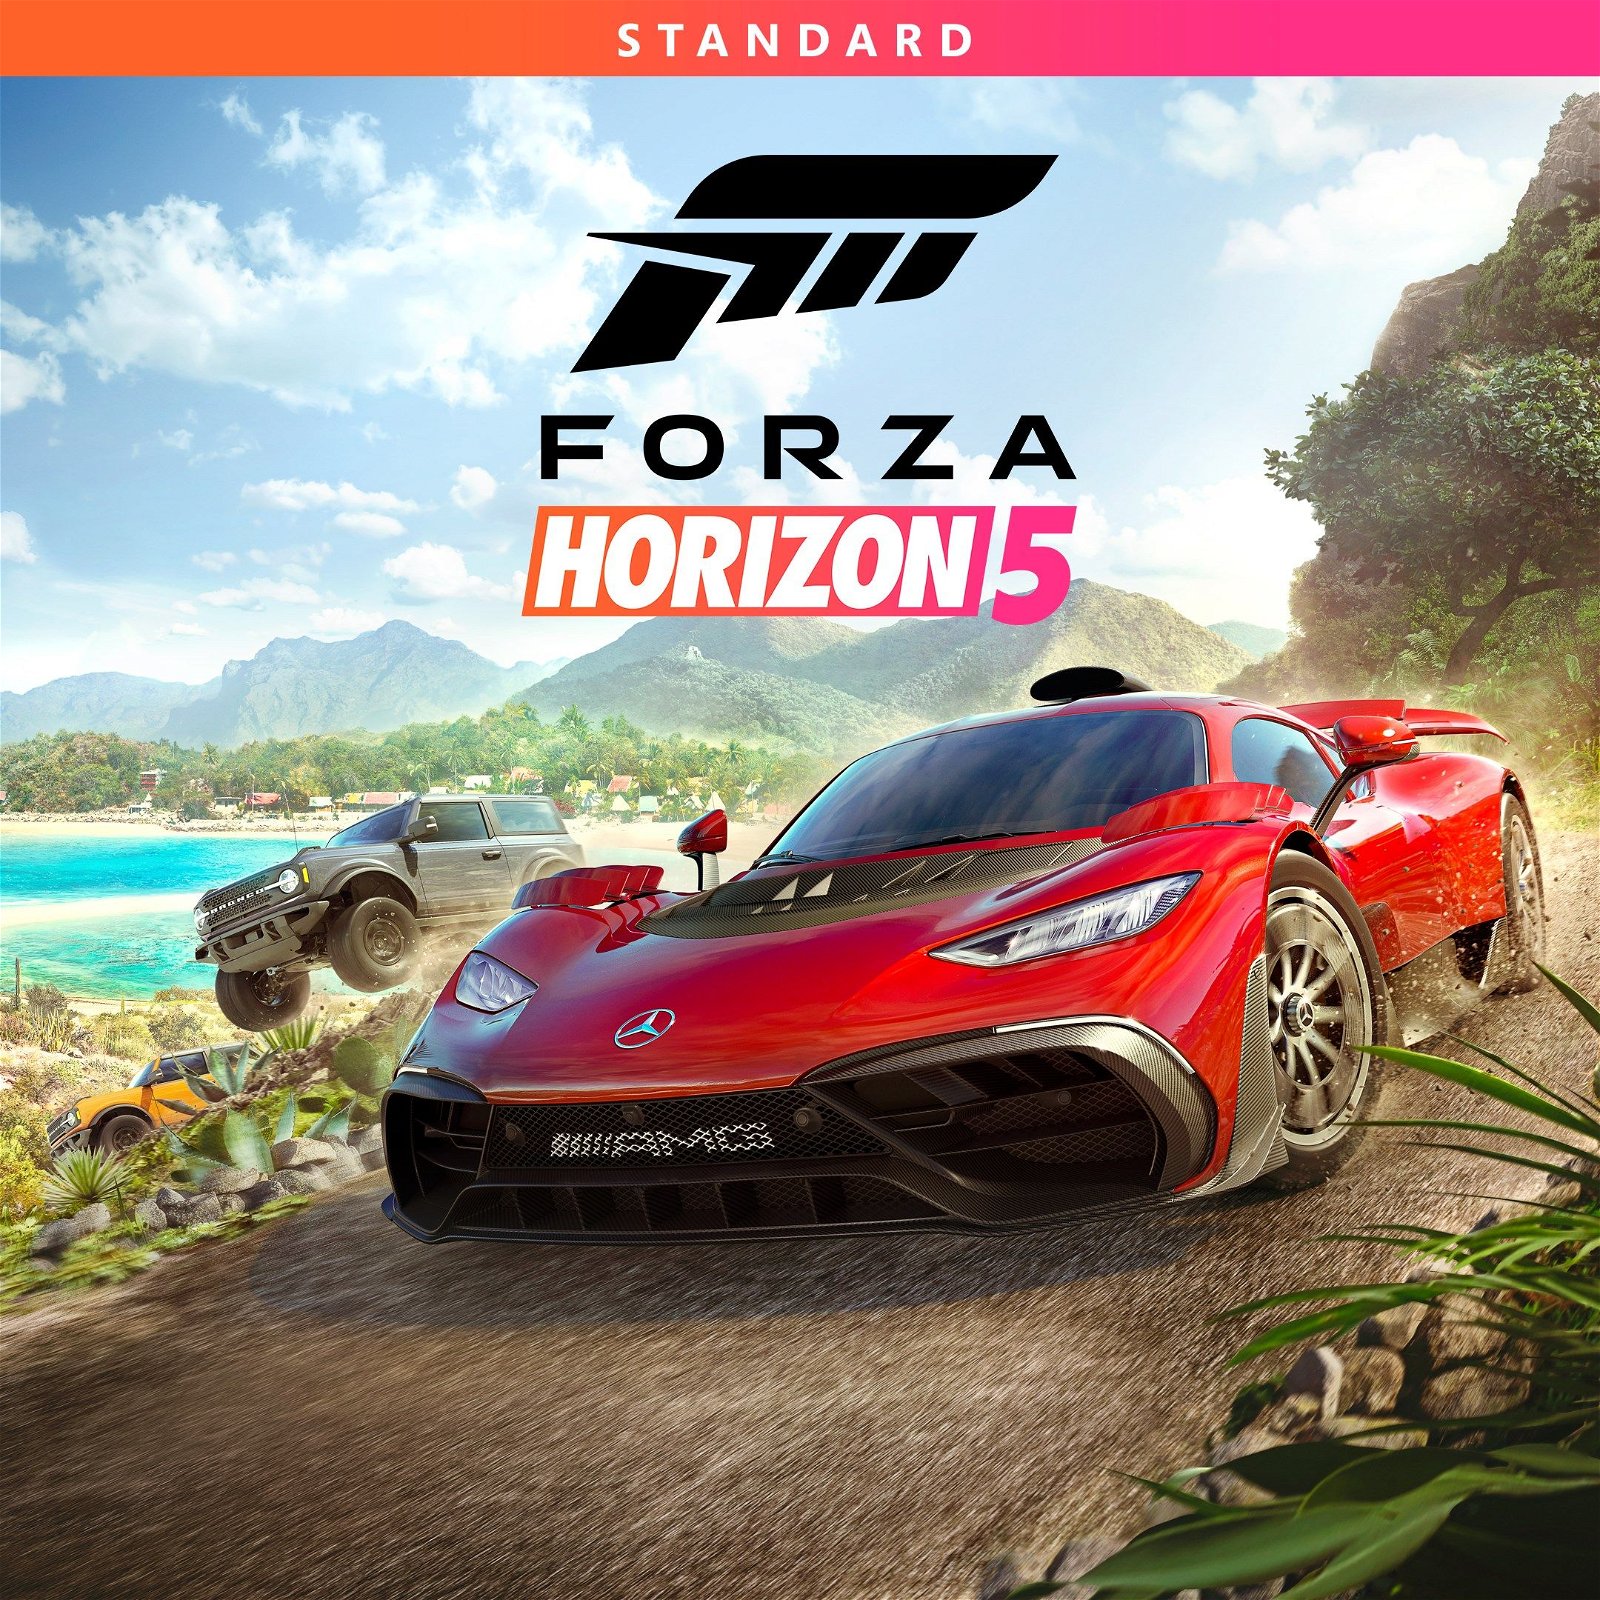 Image of Forza Horizon 5 Standard Edition